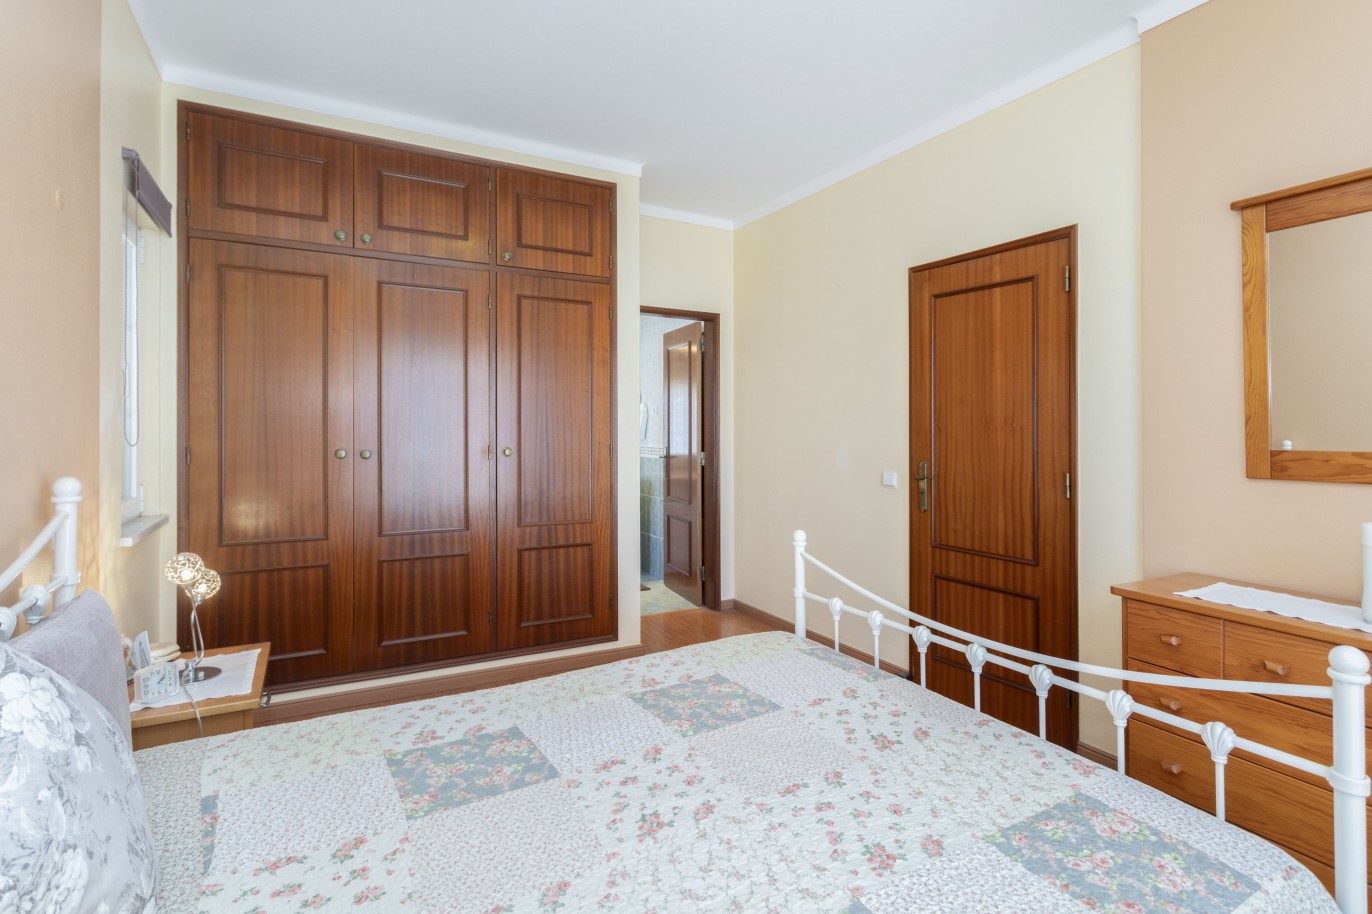 Villa de 3 chambres à vendre à Porto de Mós, Algarve_233232